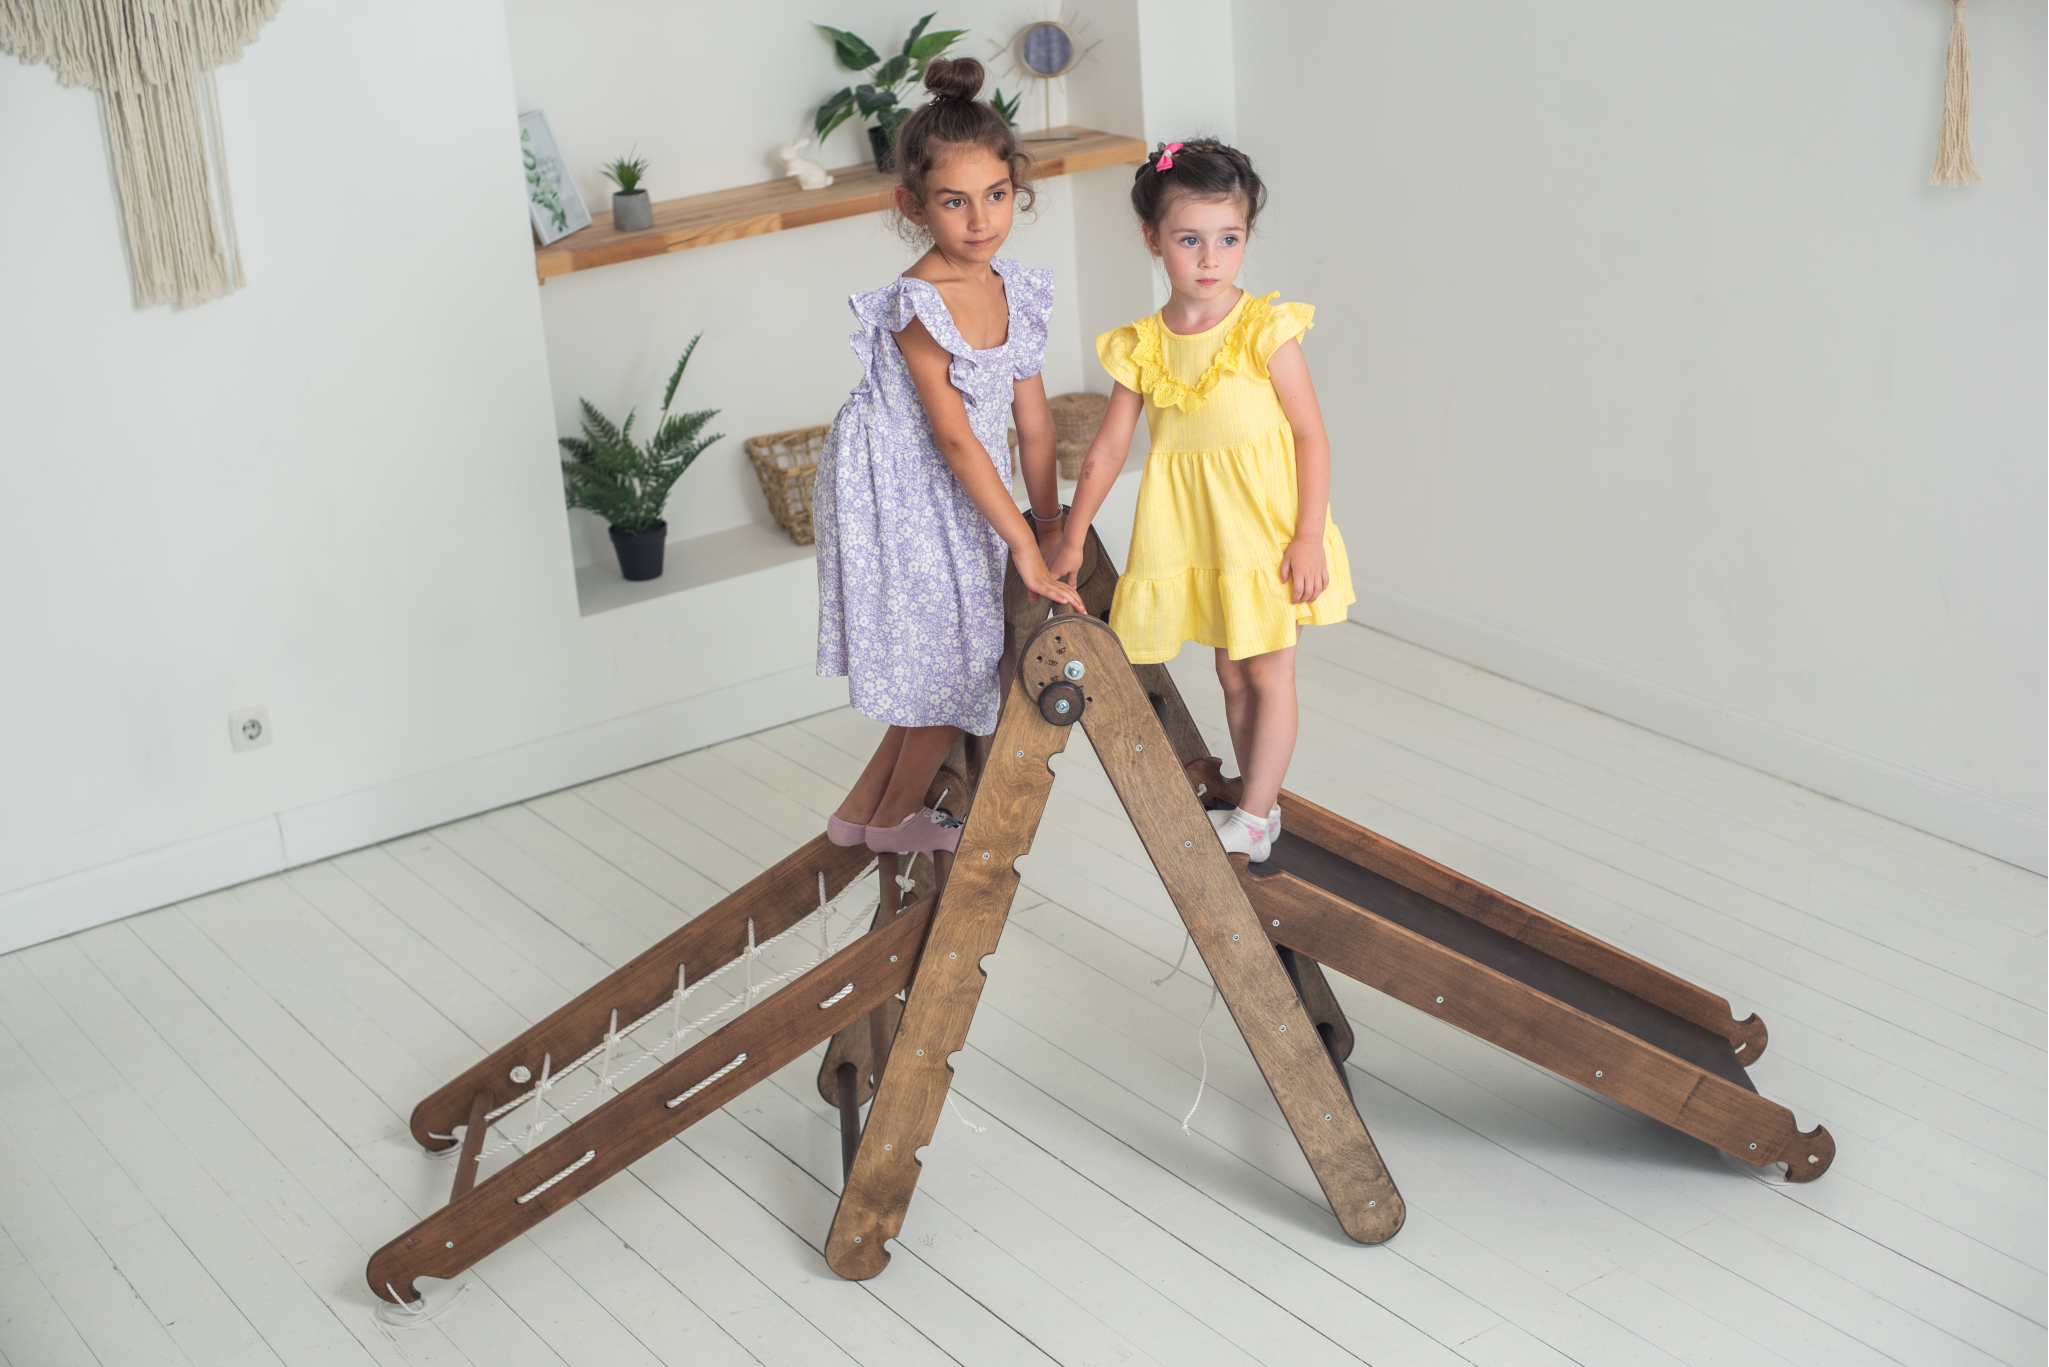 3-in-1 Montessori Climbing Frame Set: Triangle Ladder + Slide Board/Ramp + Net – Chocolate